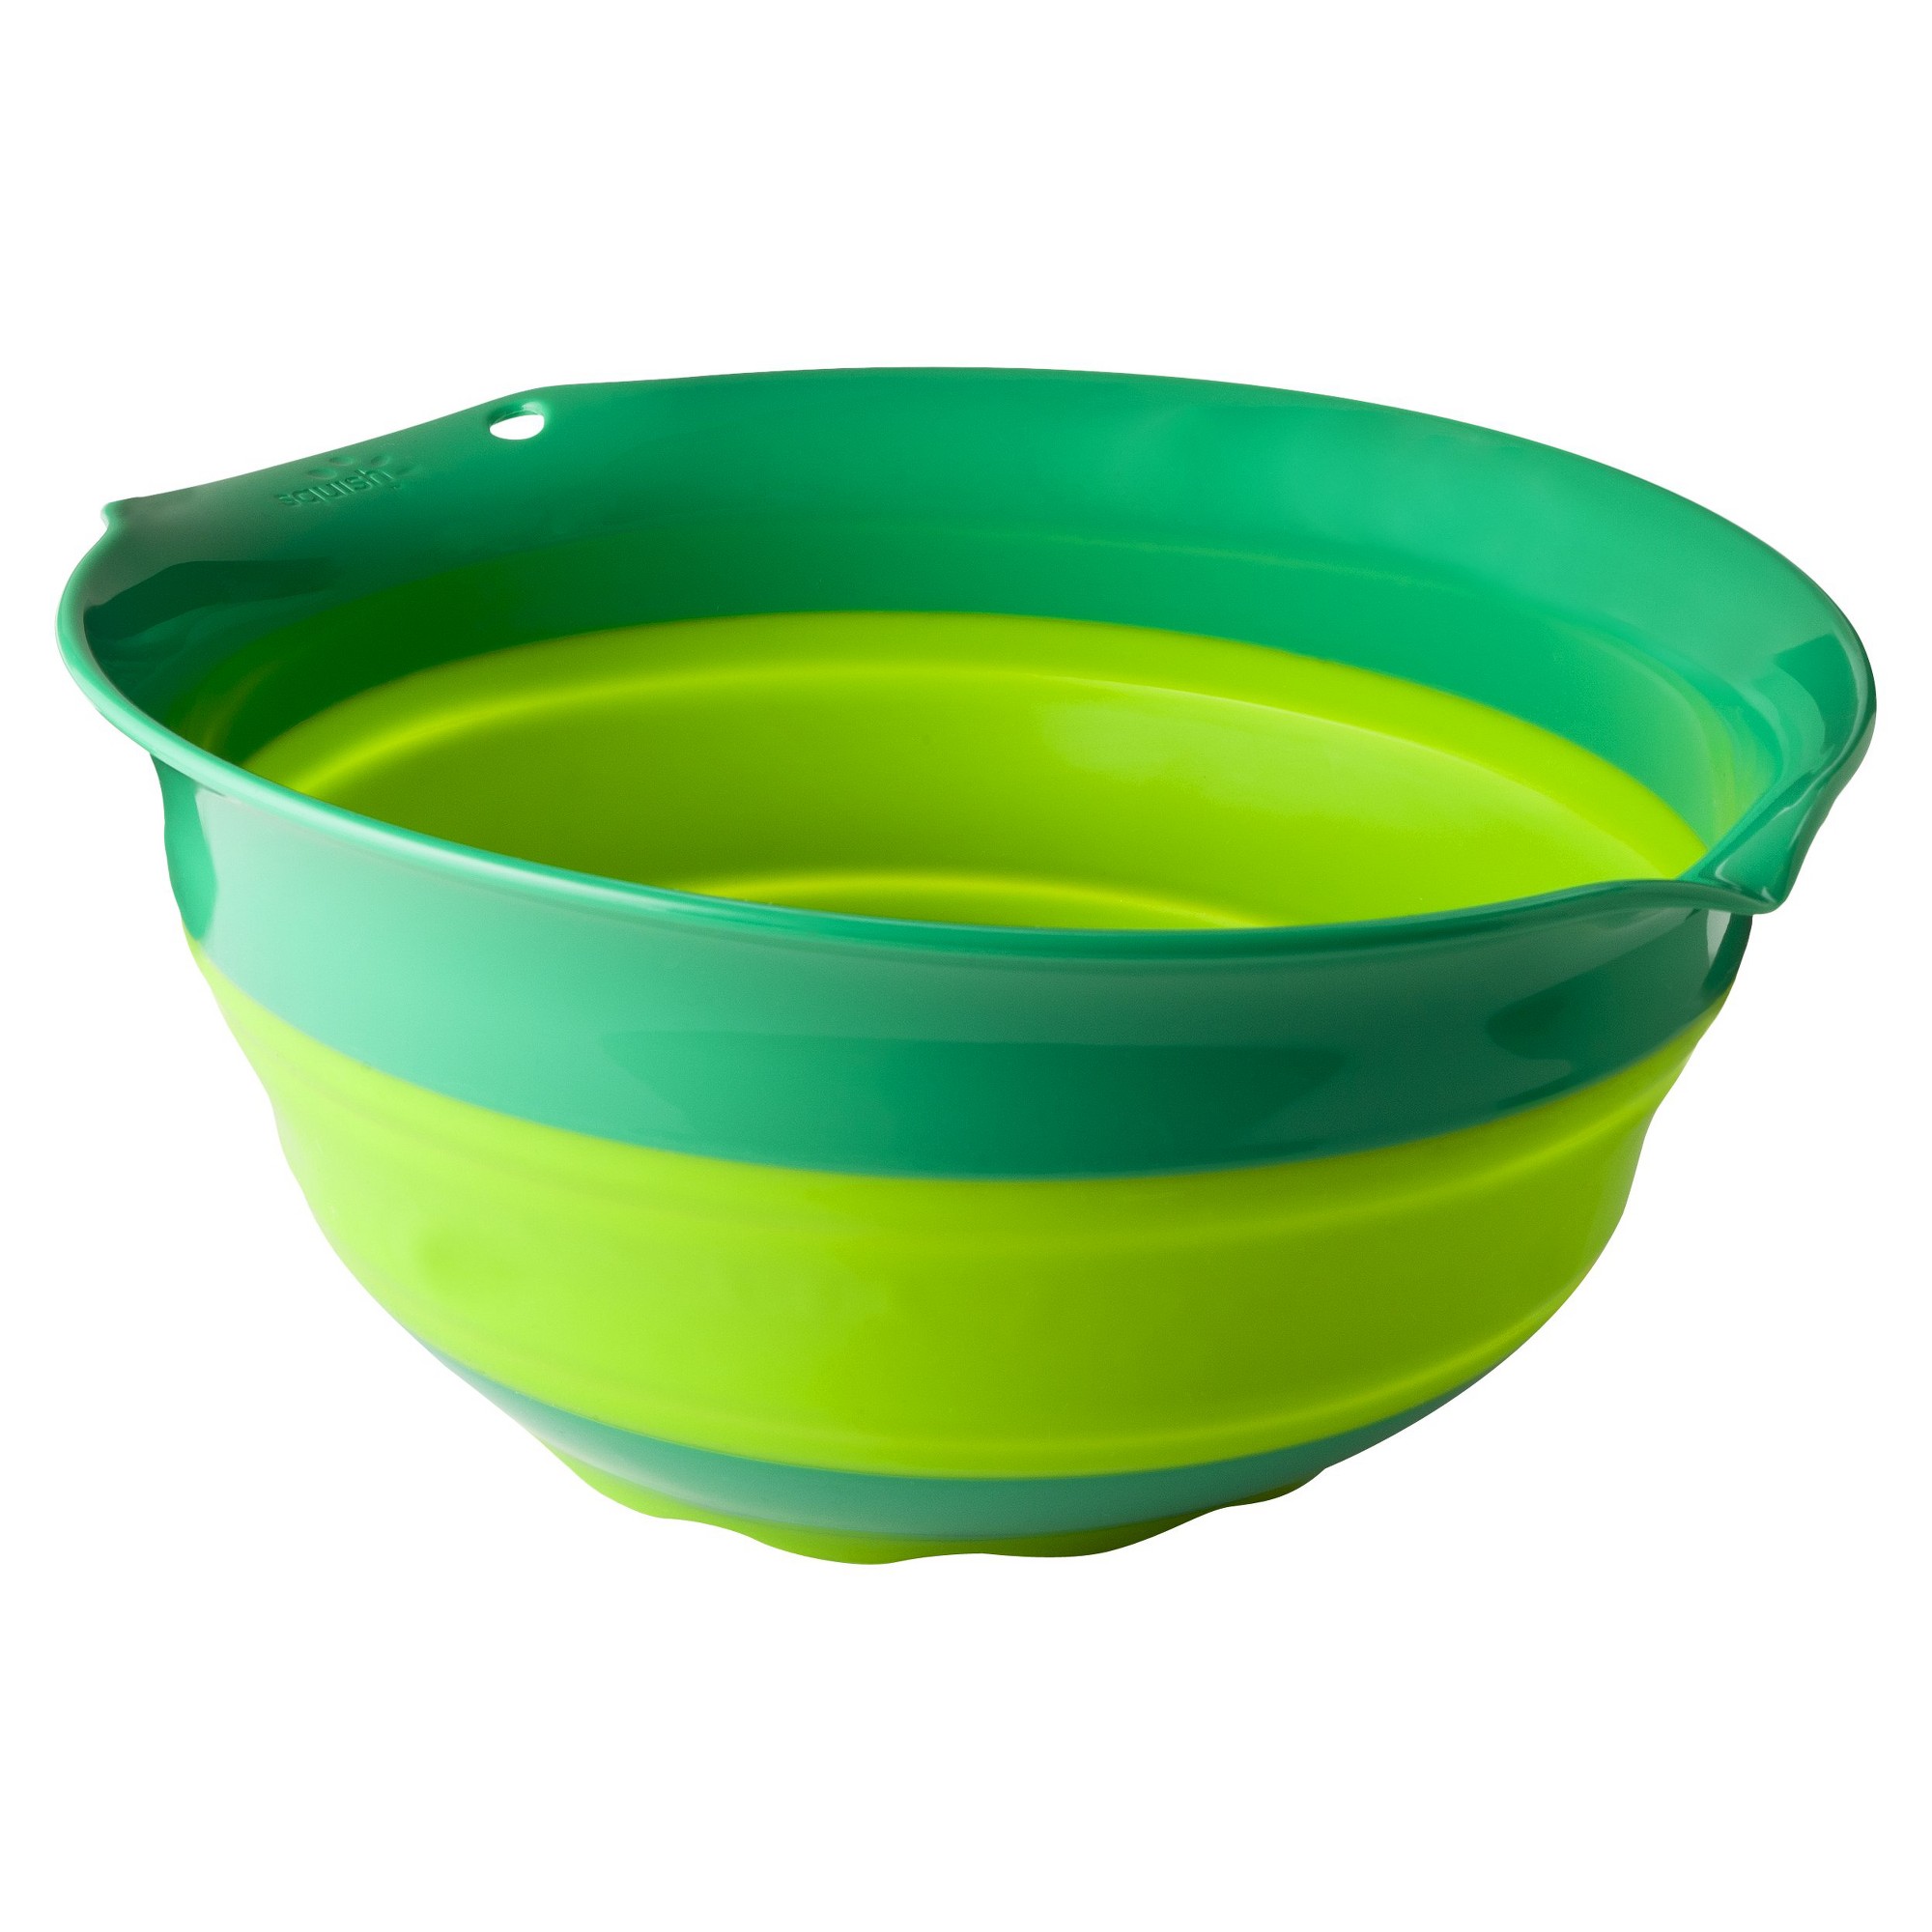 Squish 5 Quart Collapsible Bowl, Green